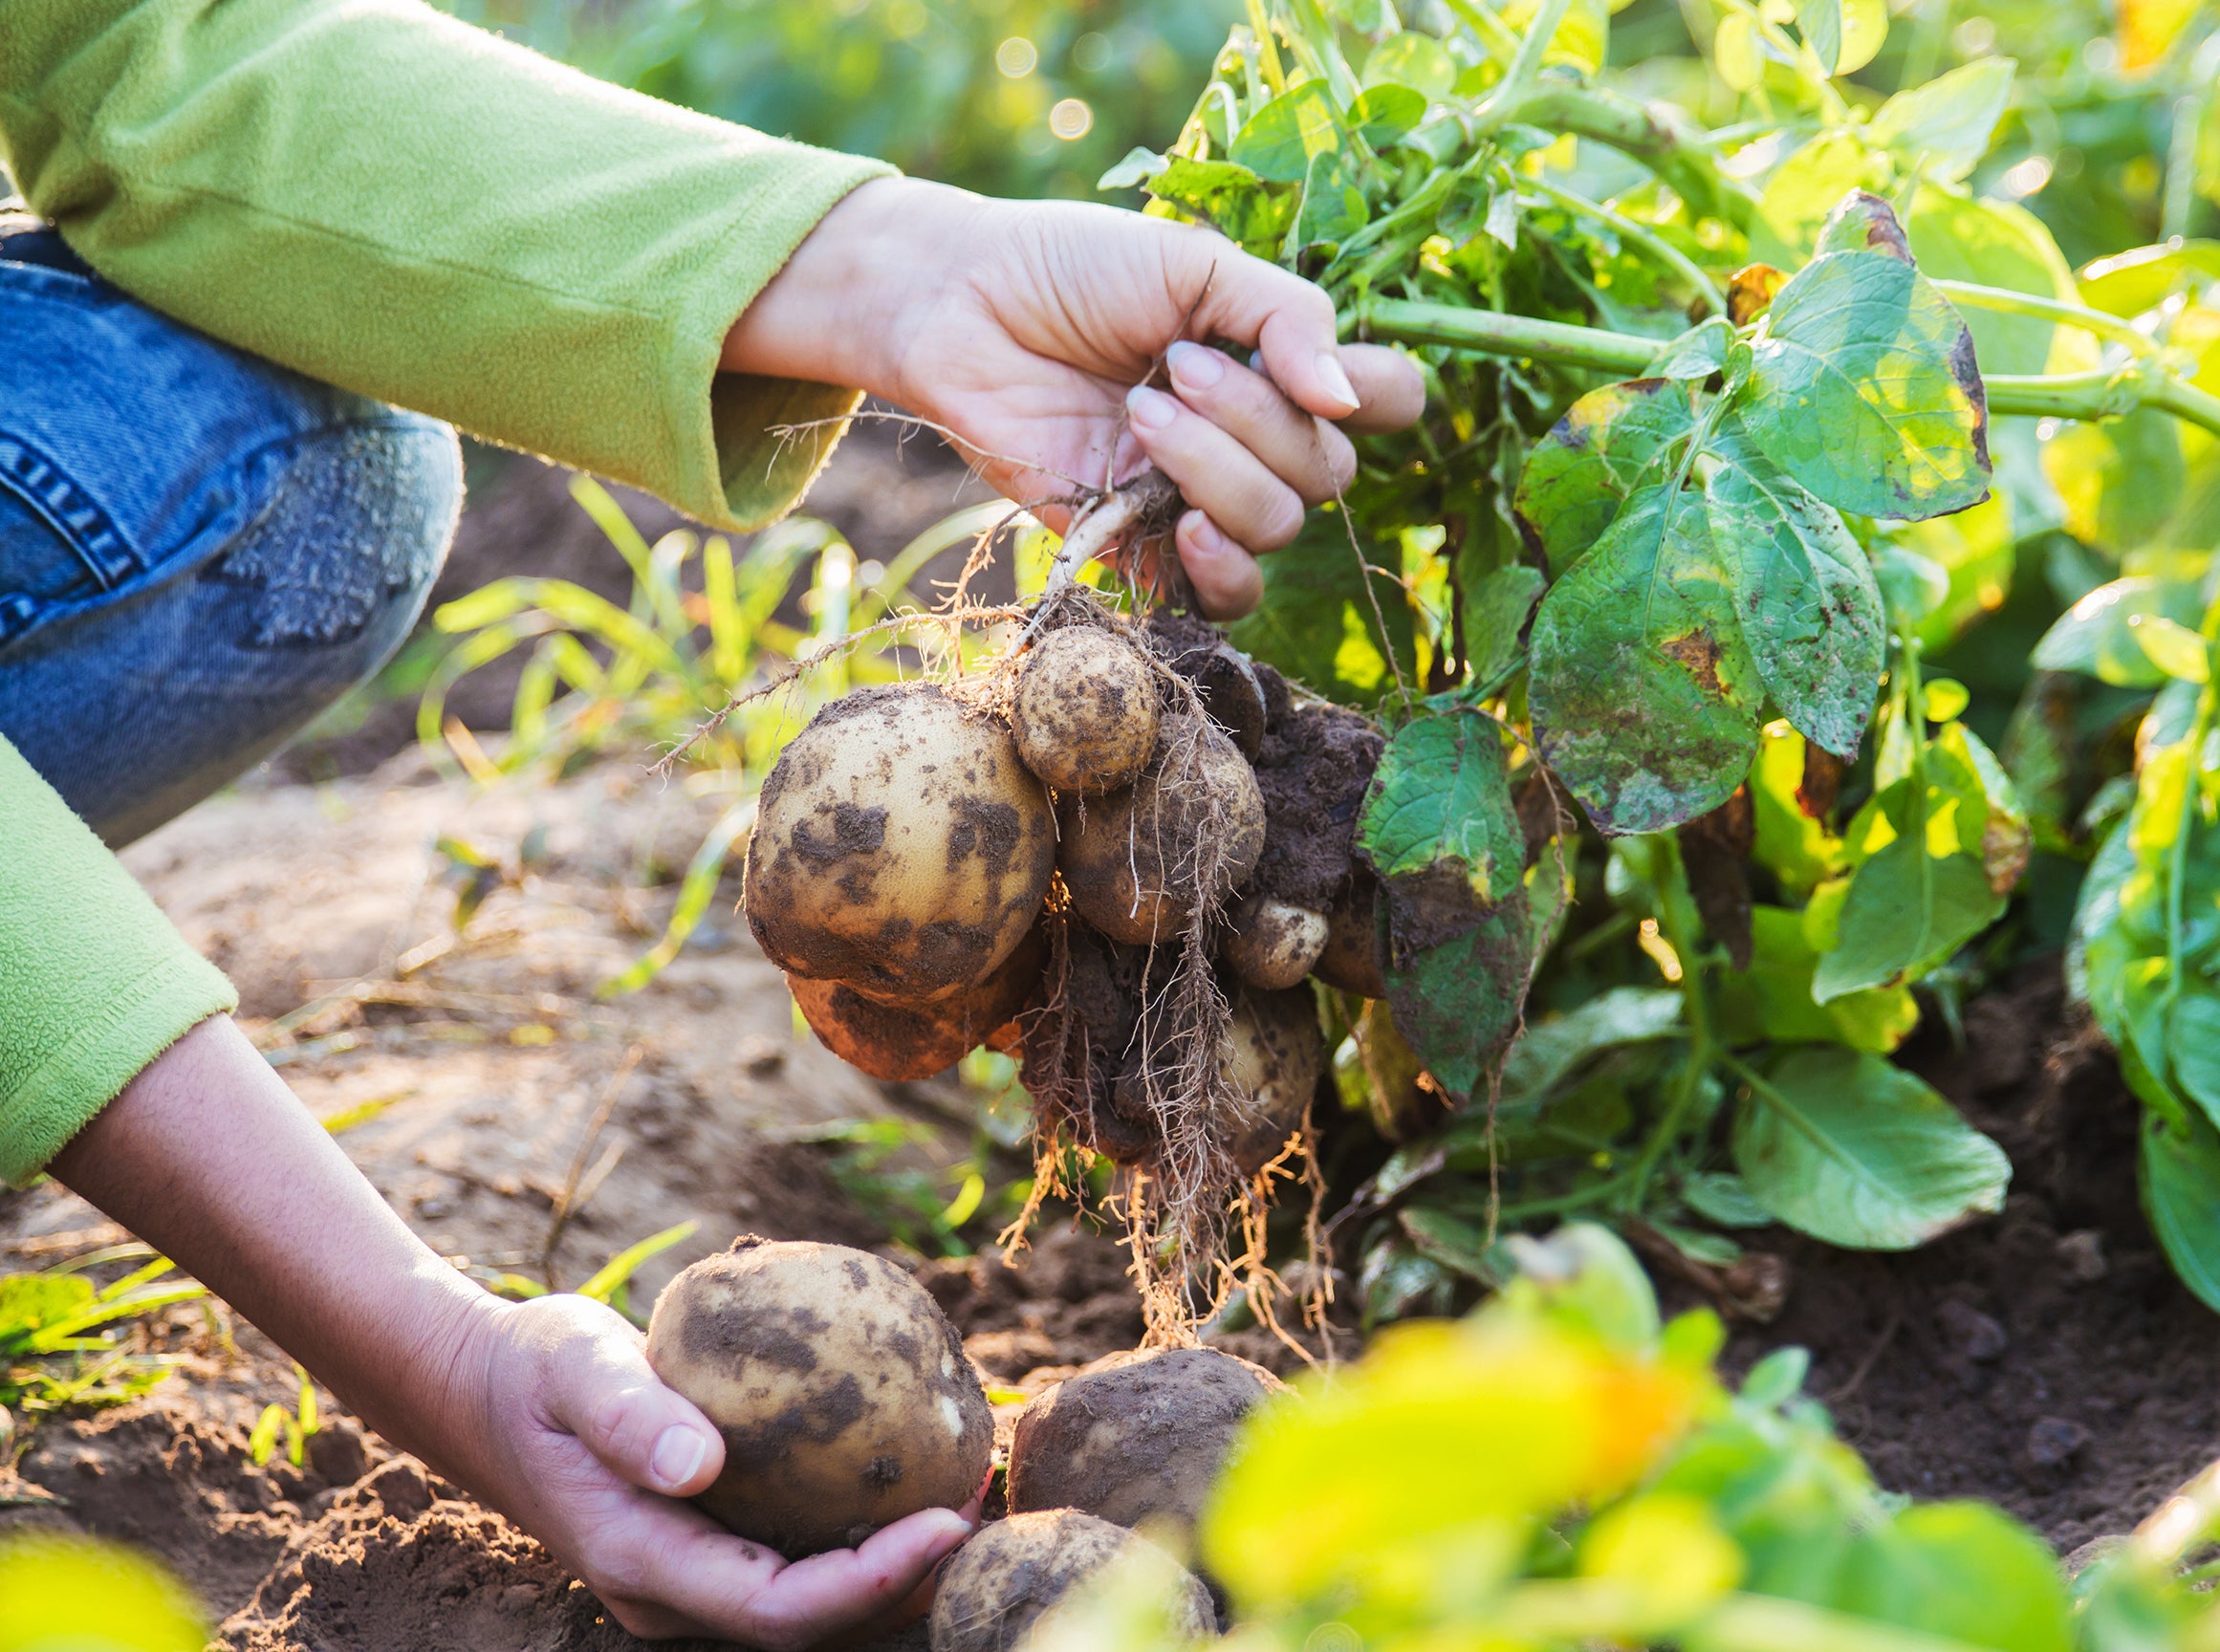 Farming potatoes used in Kekoa Foods organic baby foods.